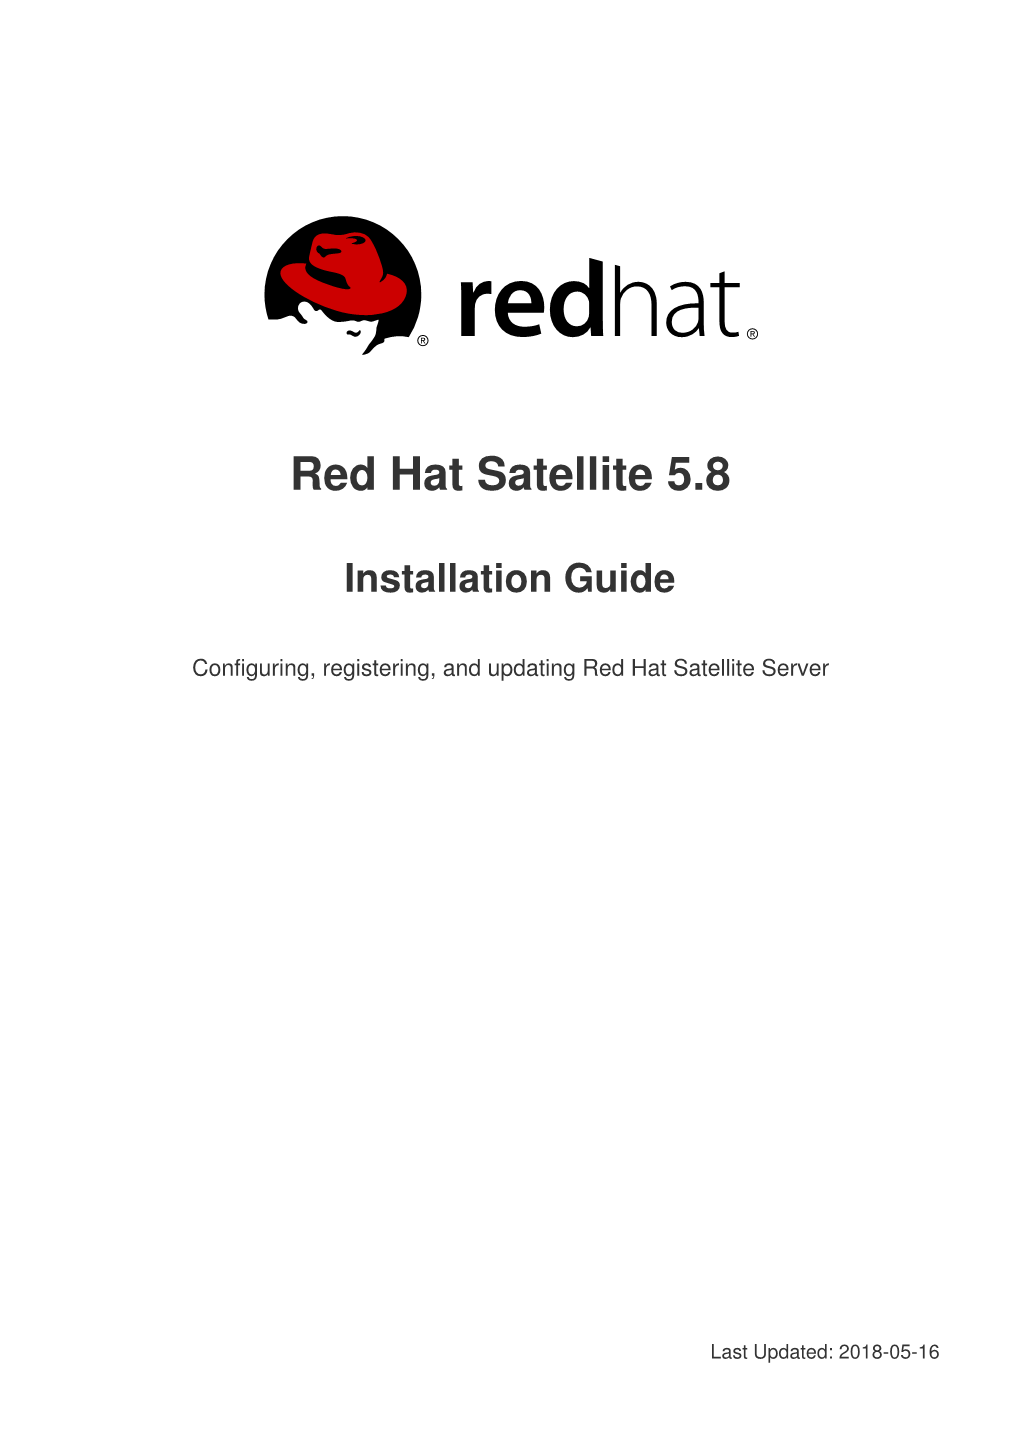 Red Hat Satellite 5.8 Installation Guide